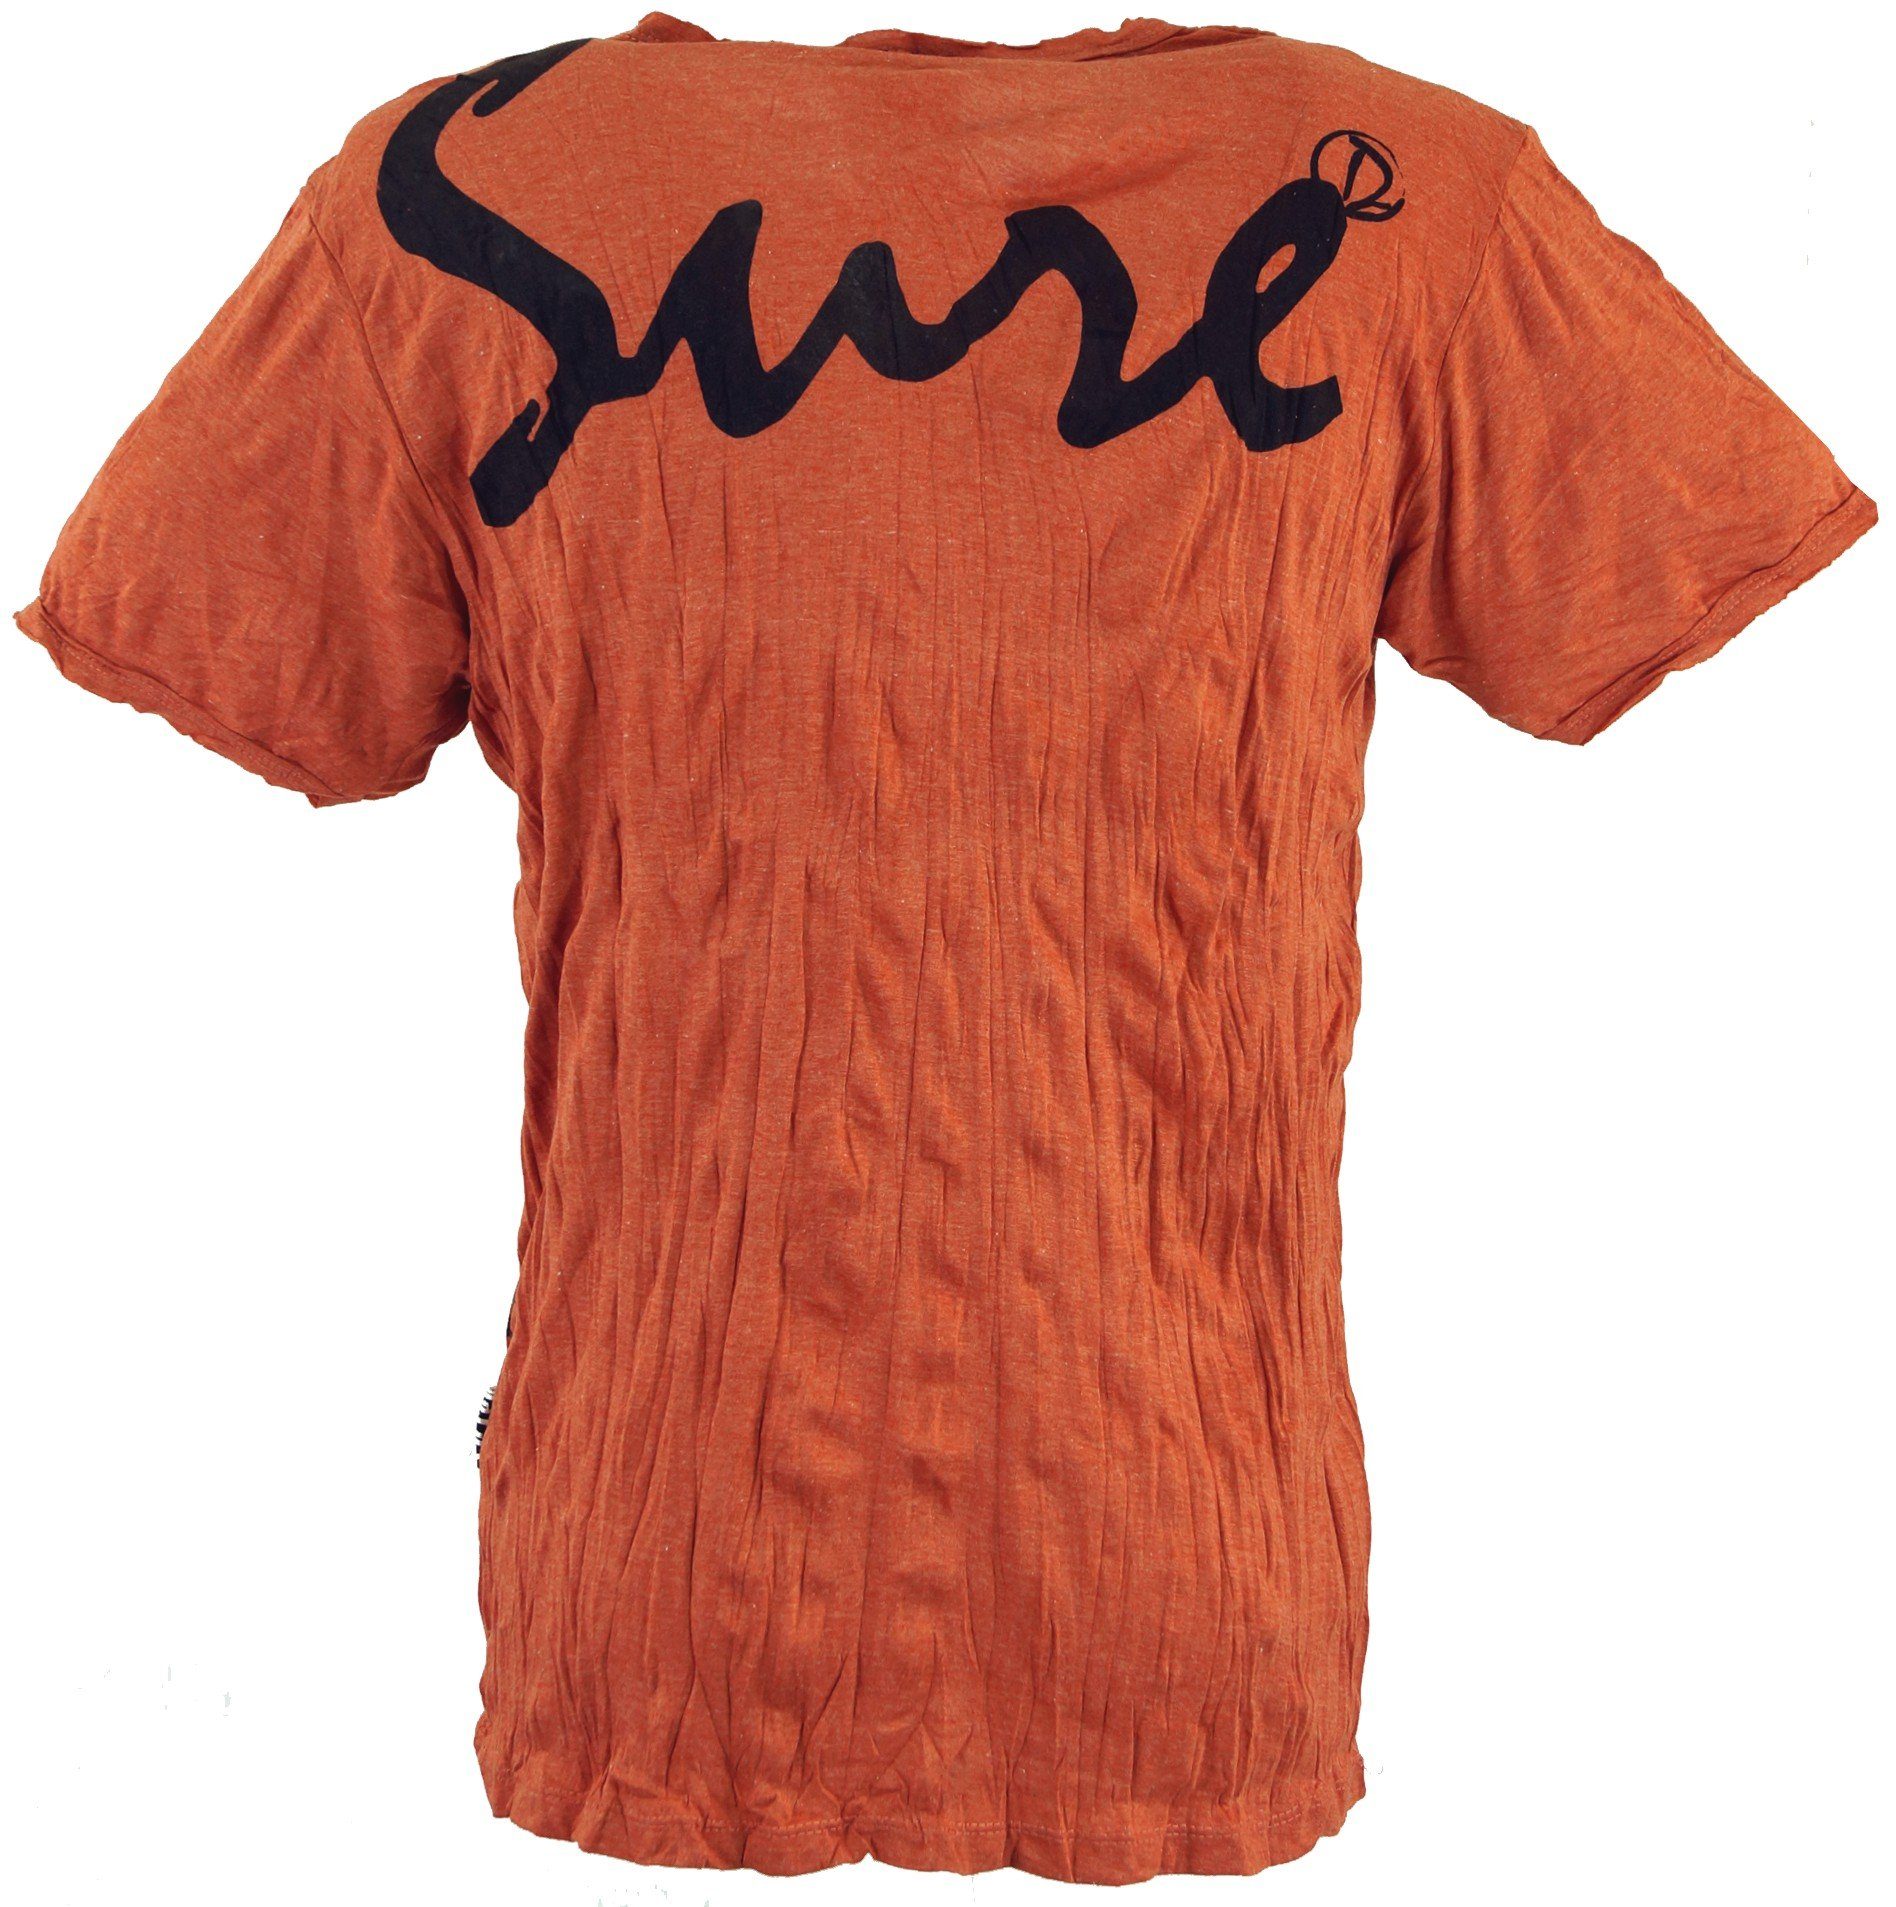 Guru-Shop T-Shirt Sure T-Shirt Happy Goa - Buddha alternative Style, Festival, Bekleidung rostorange